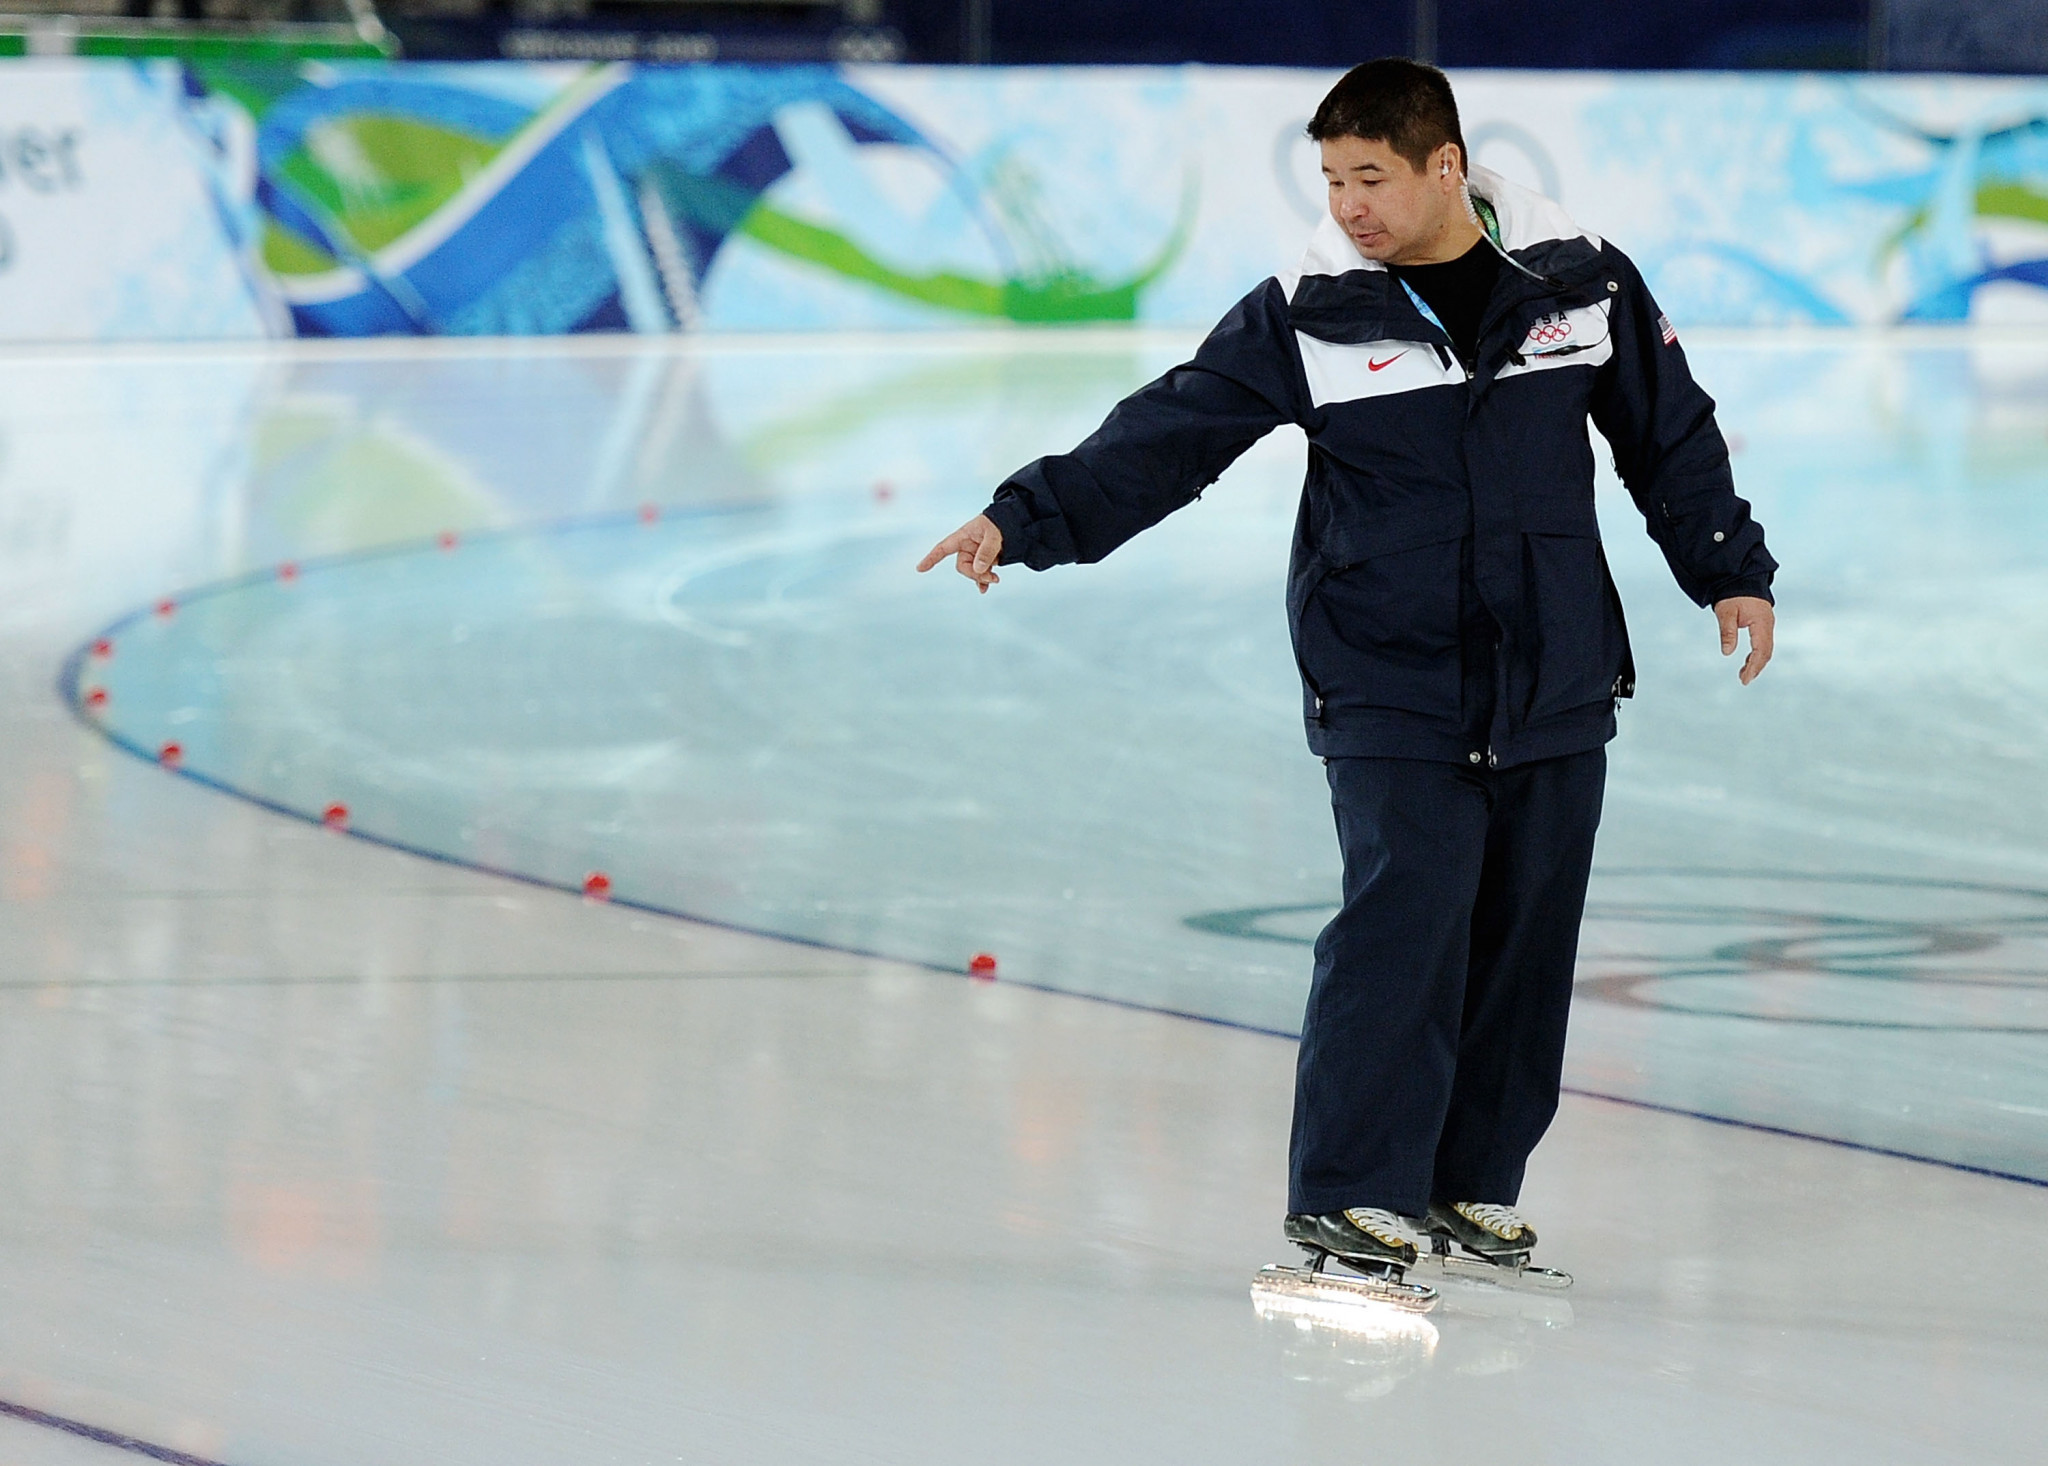 Ryan Shimabukuro previously coached three US Speedskating teams at the Olympic Games ©Getty Images